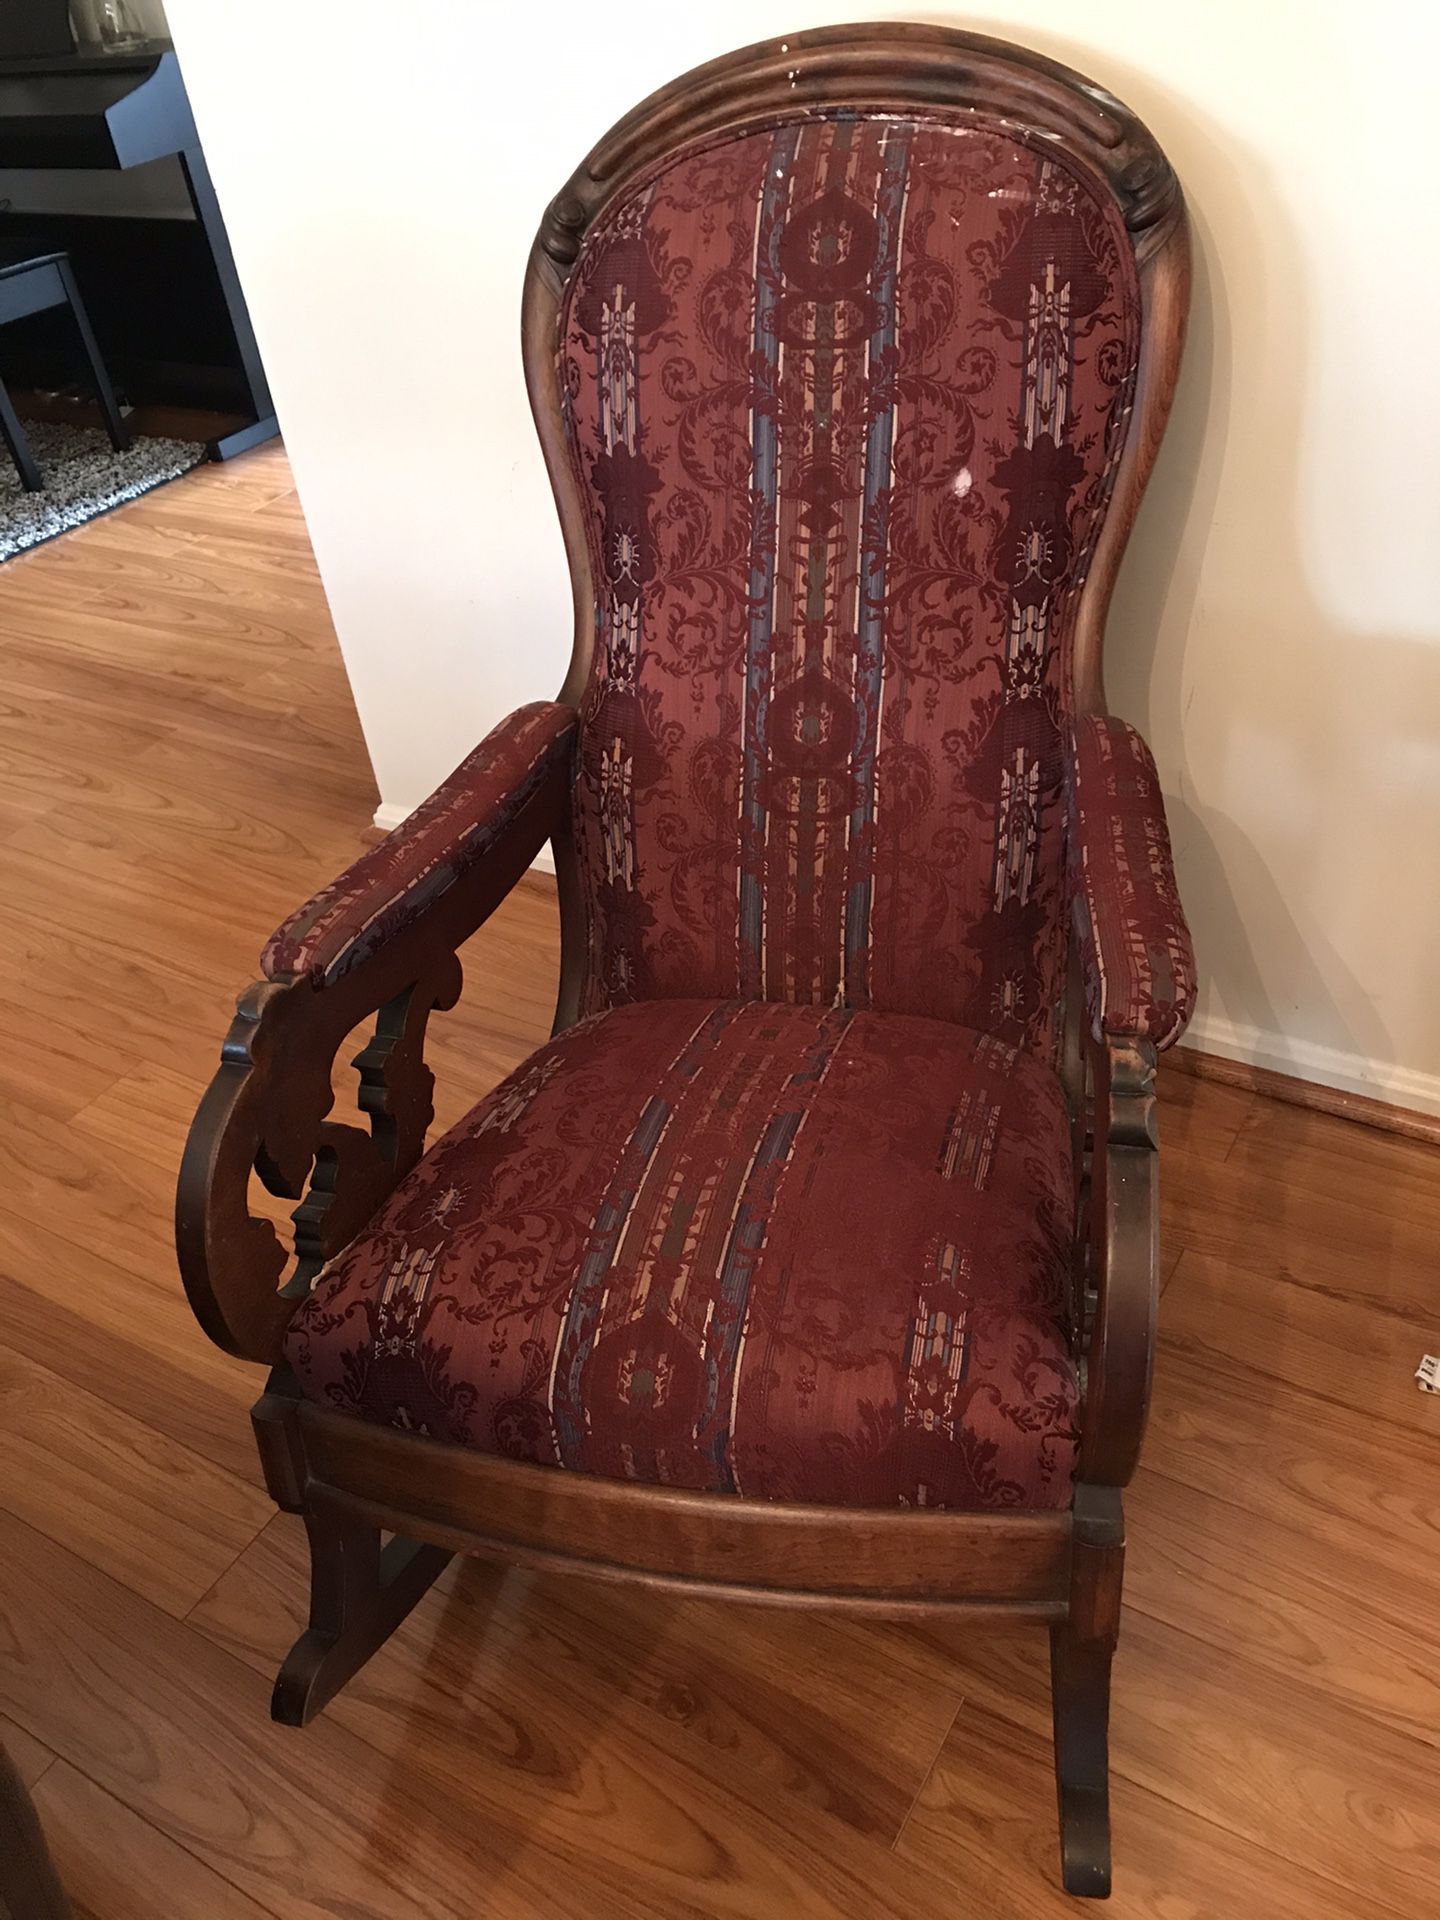 Beautiful antique rocking chair